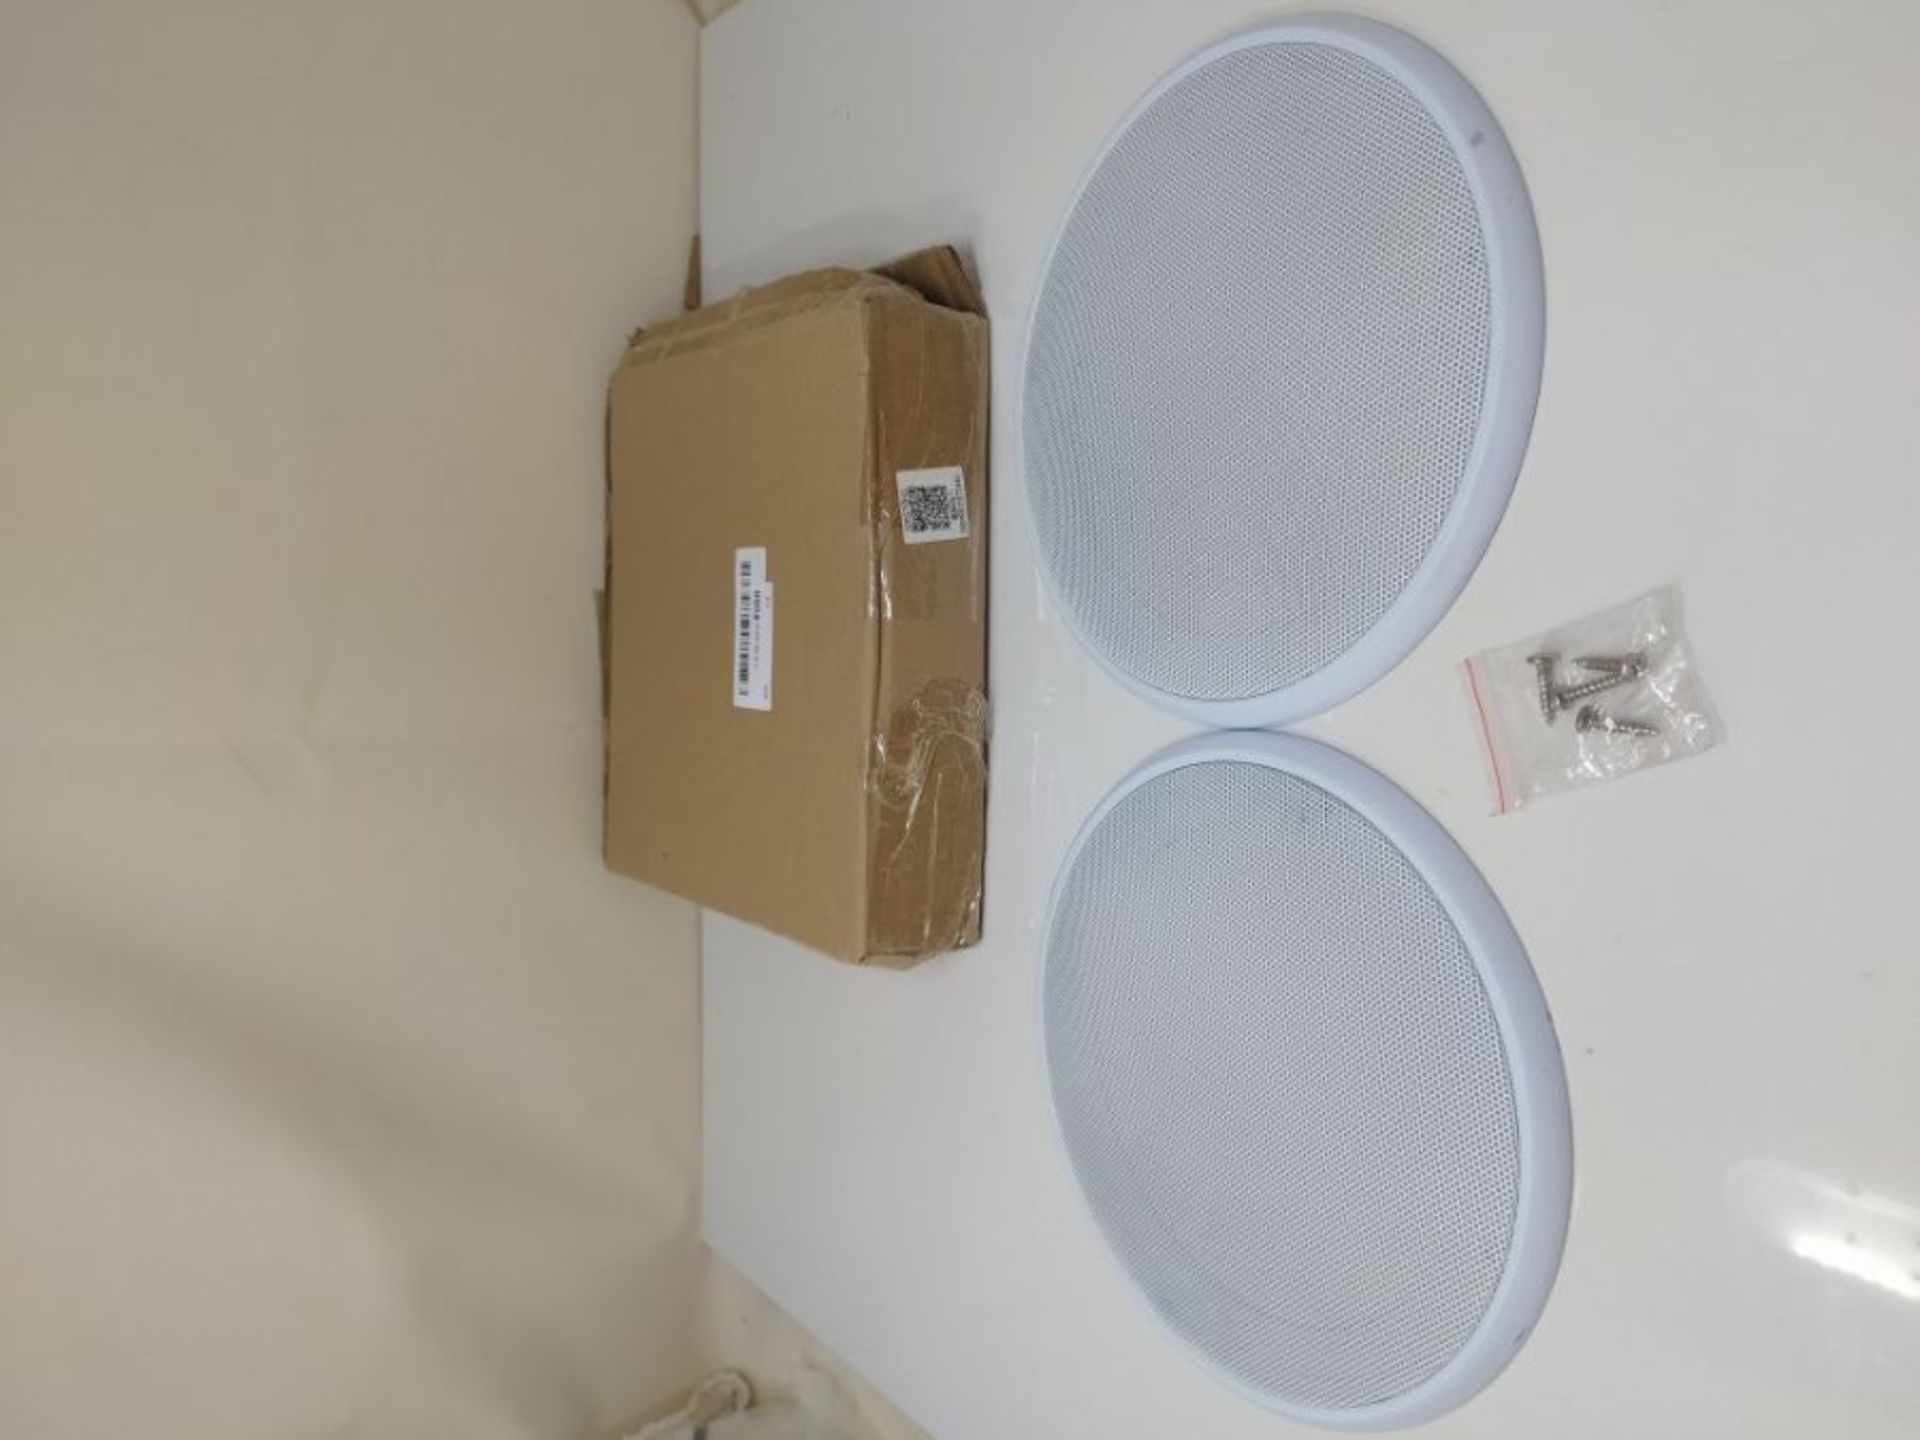 Mugast 2PCS Speaker Grille, Audio Speaker Cover for home speakers, ceilings, car audio - Image 2 of 2